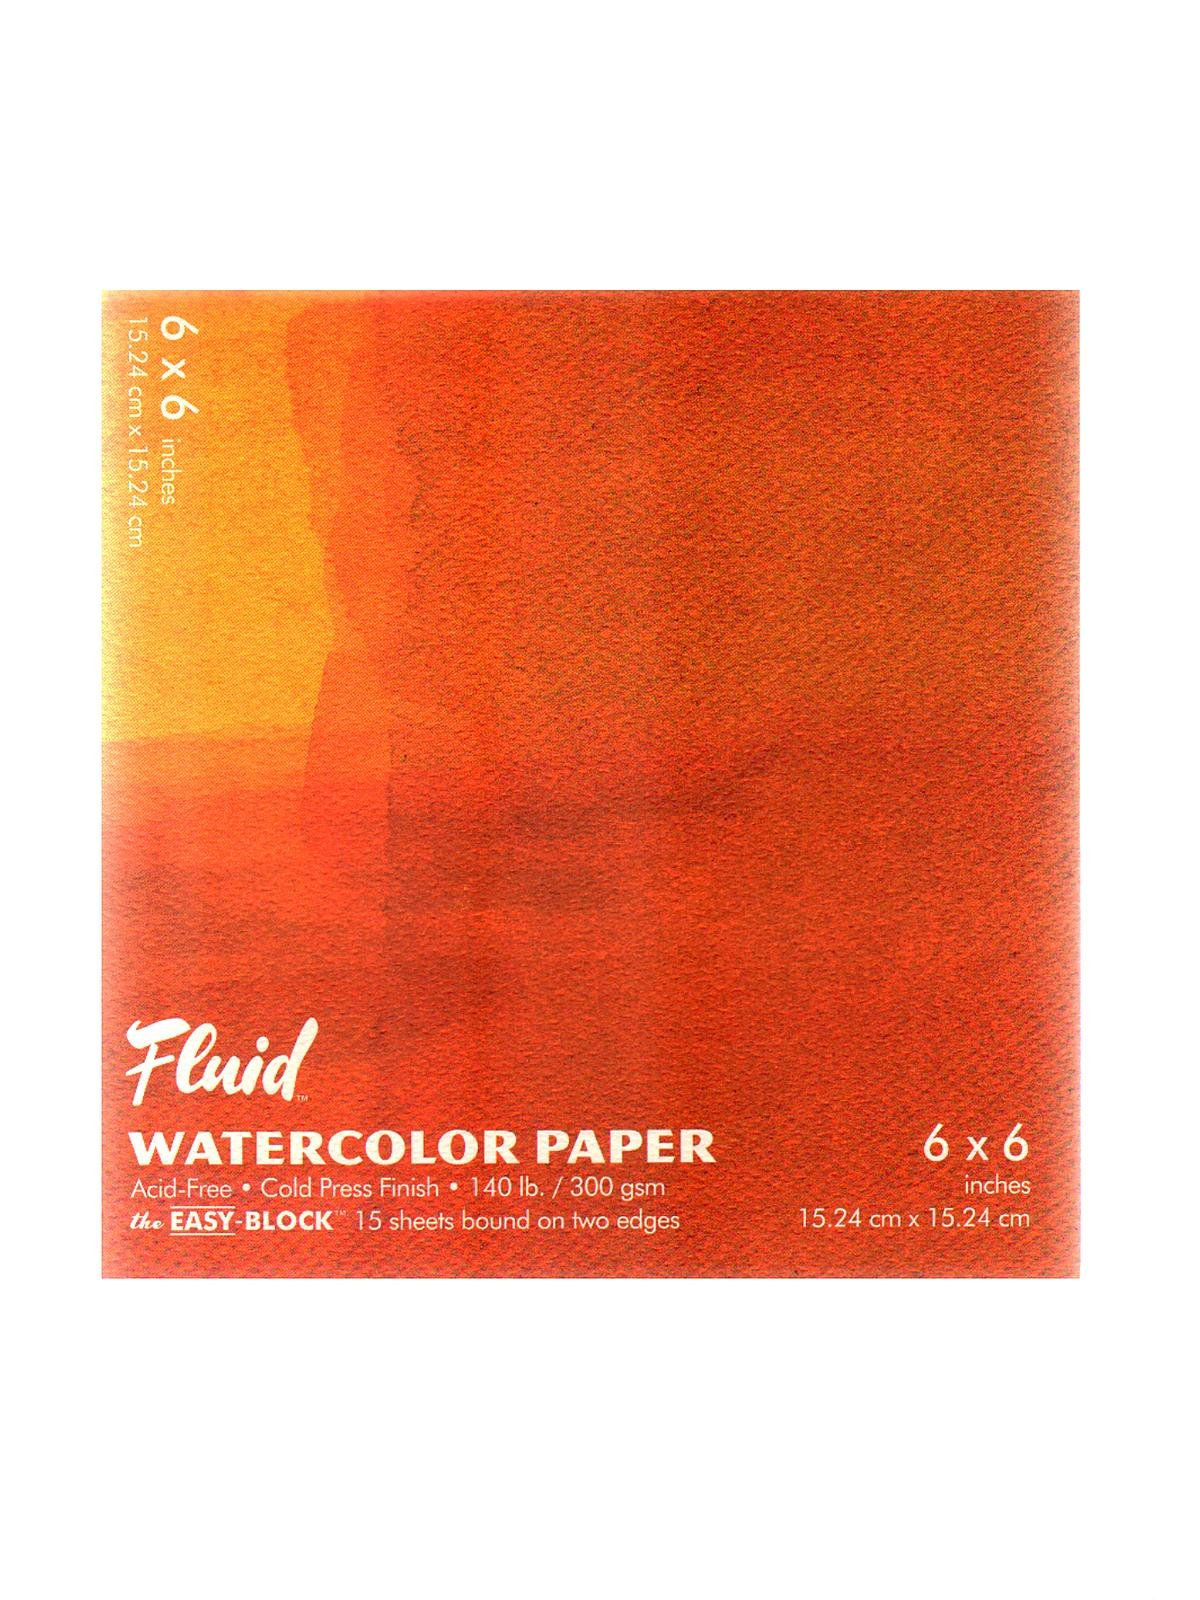 Fluid Cold Press Watercolor Paper